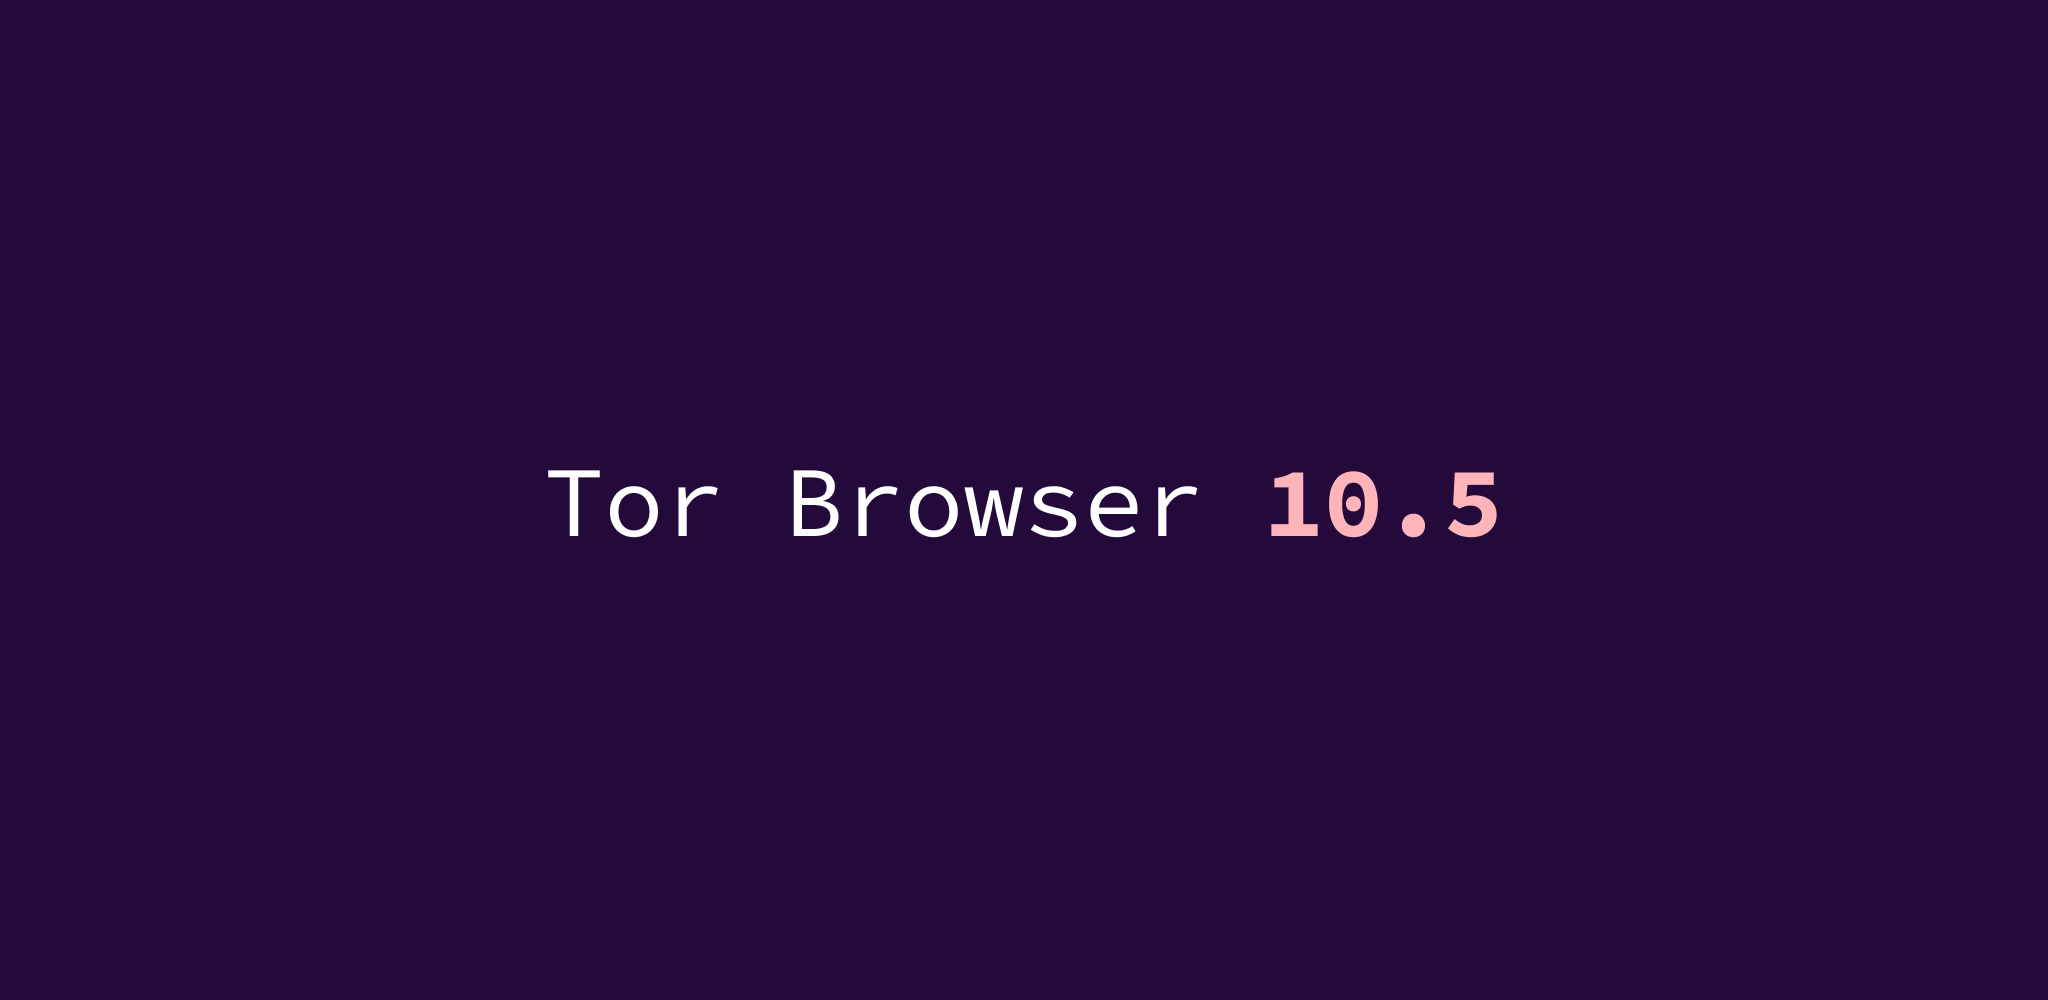 Tor browser os x gydra сценарий мероприятий о наркотиках